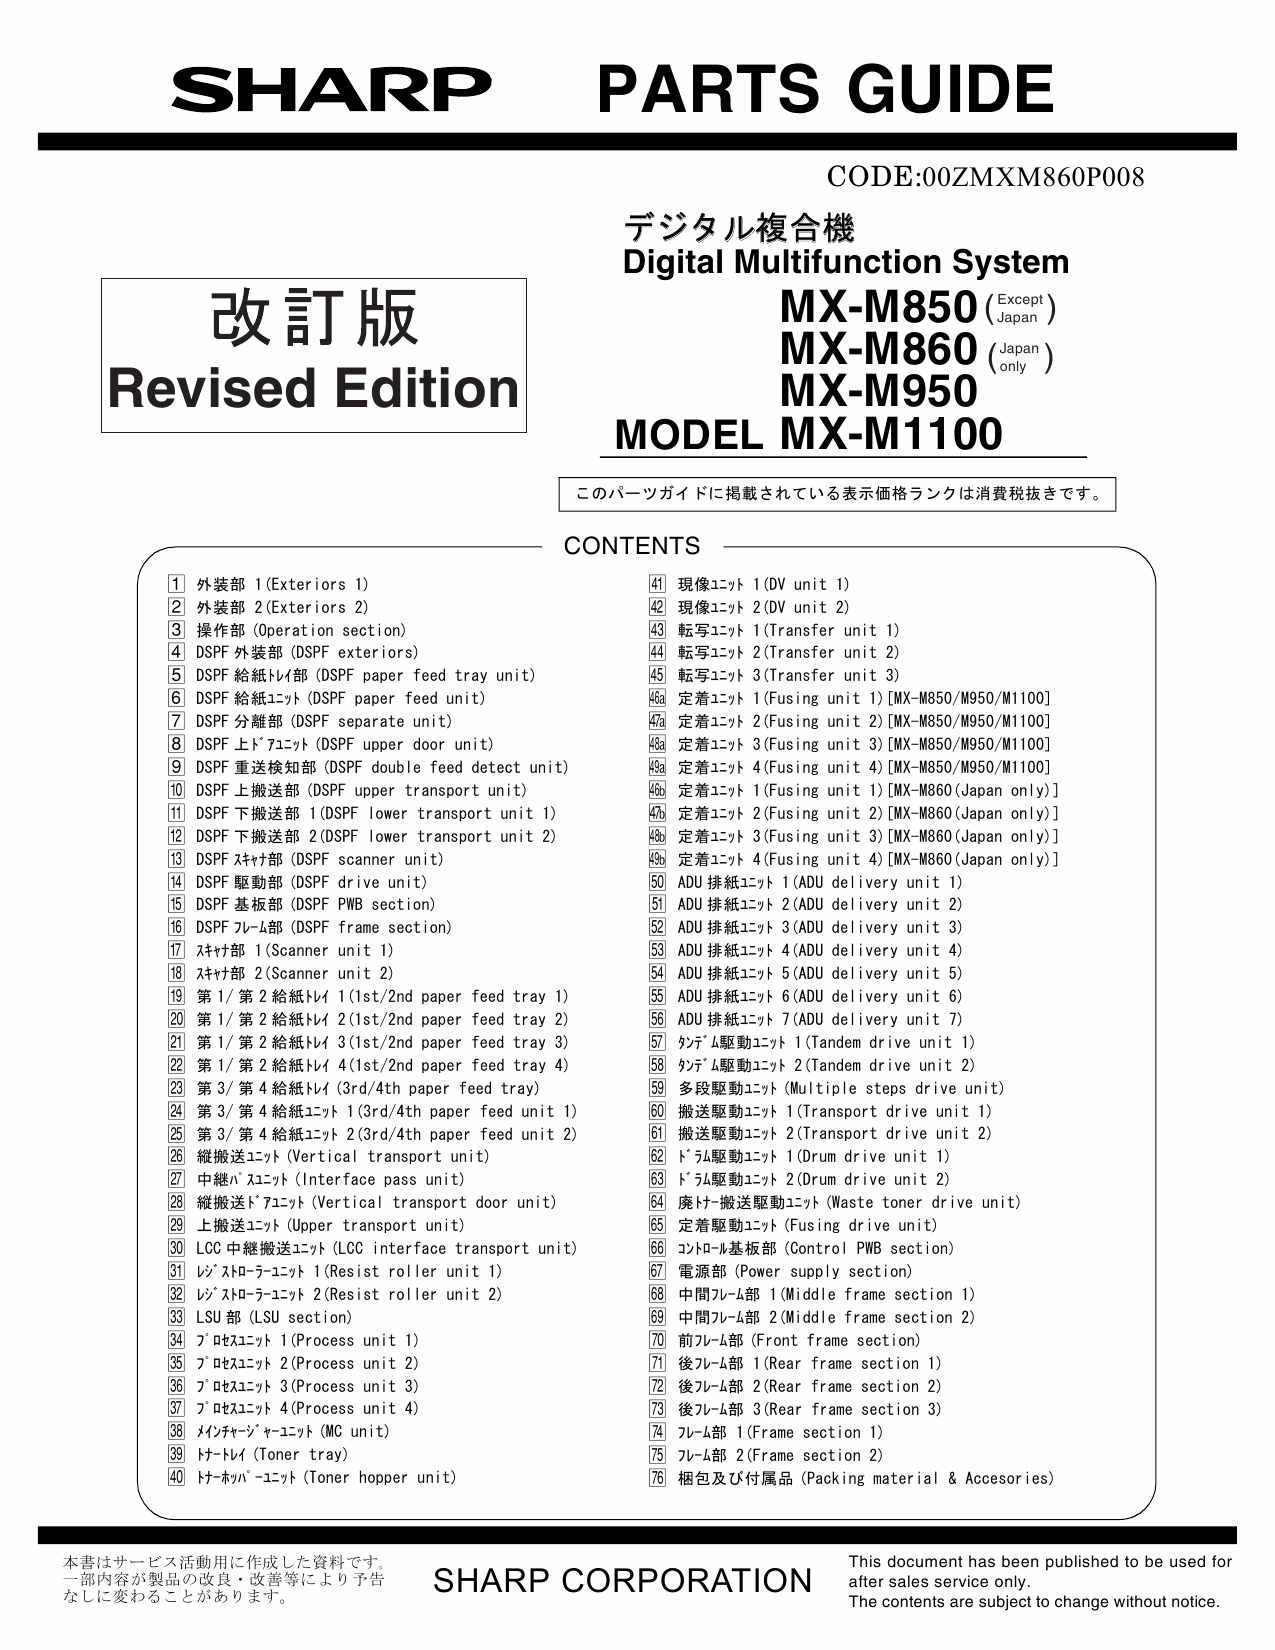 SHARP MX M850 M860 M950 M1100 Parts Manual-1